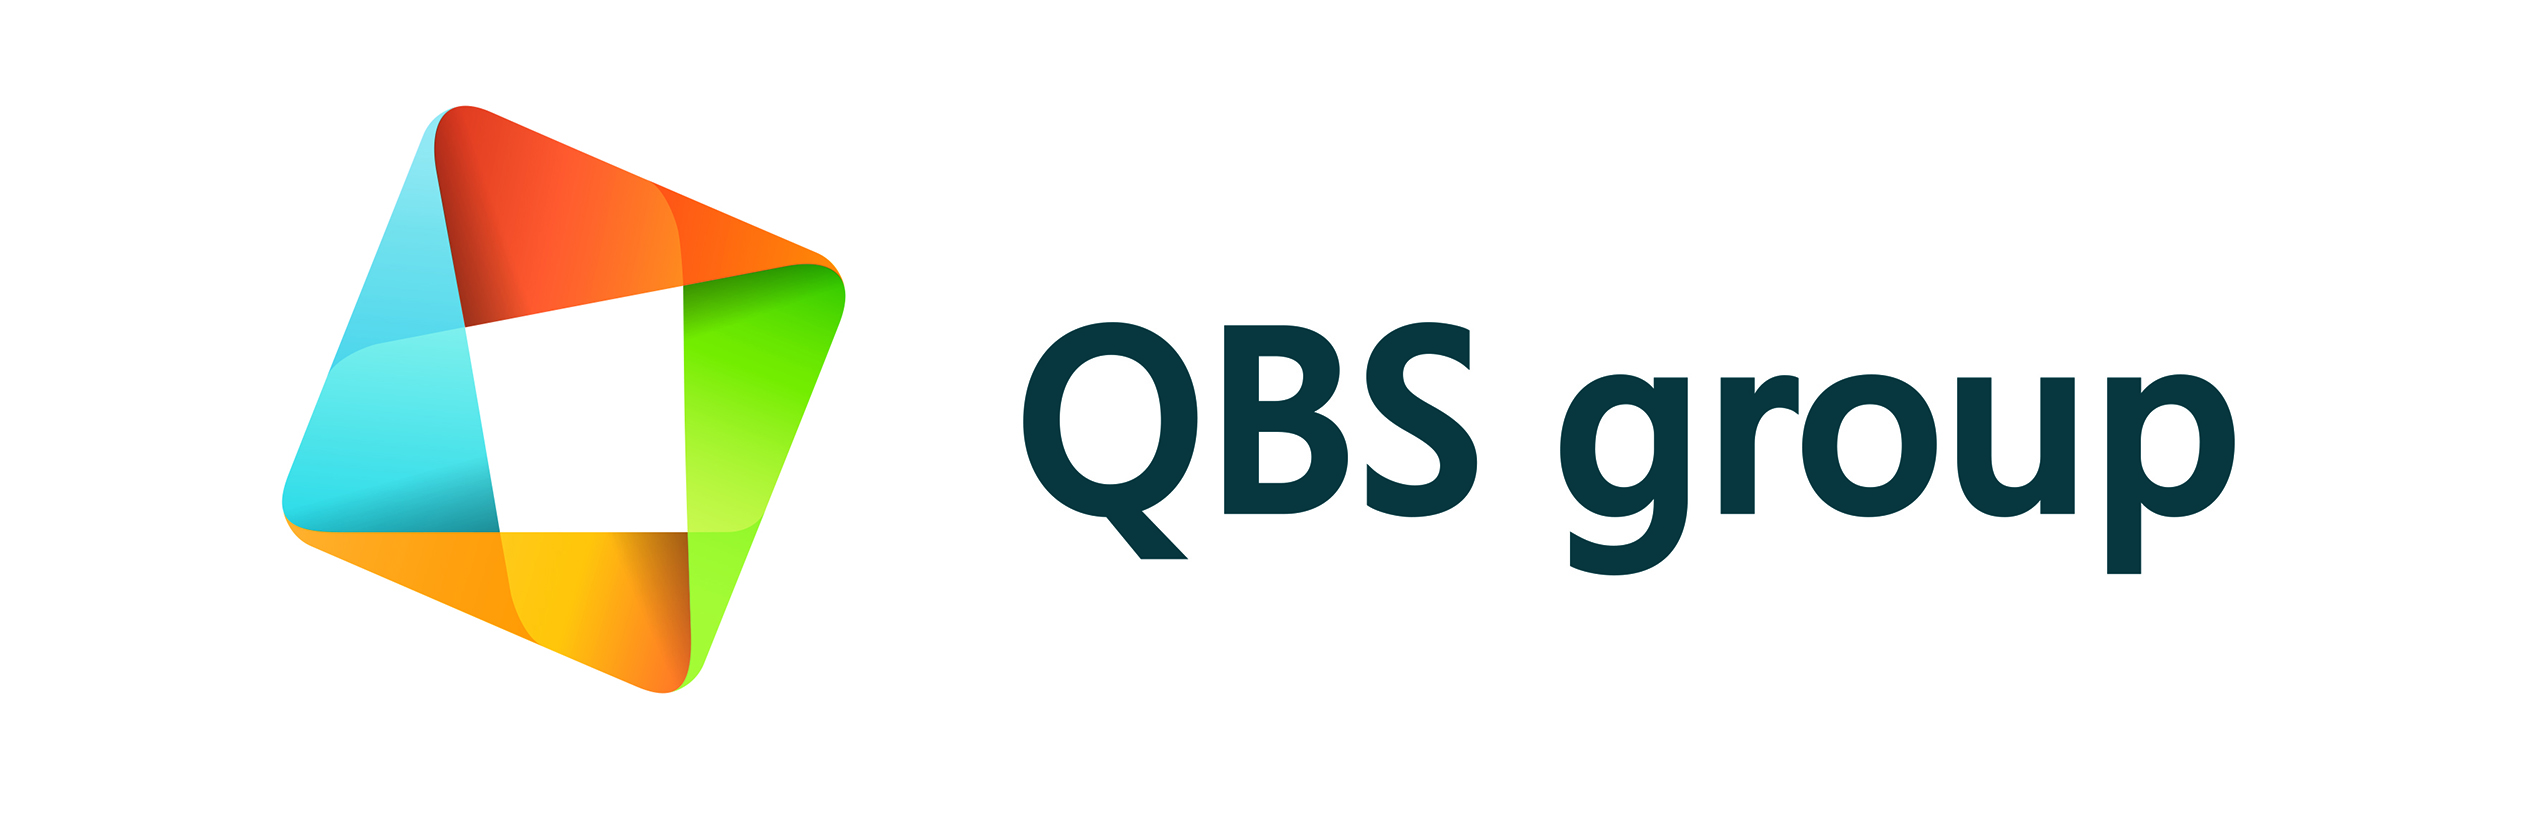 QBS logo 3245 x 1153 px (1)-1